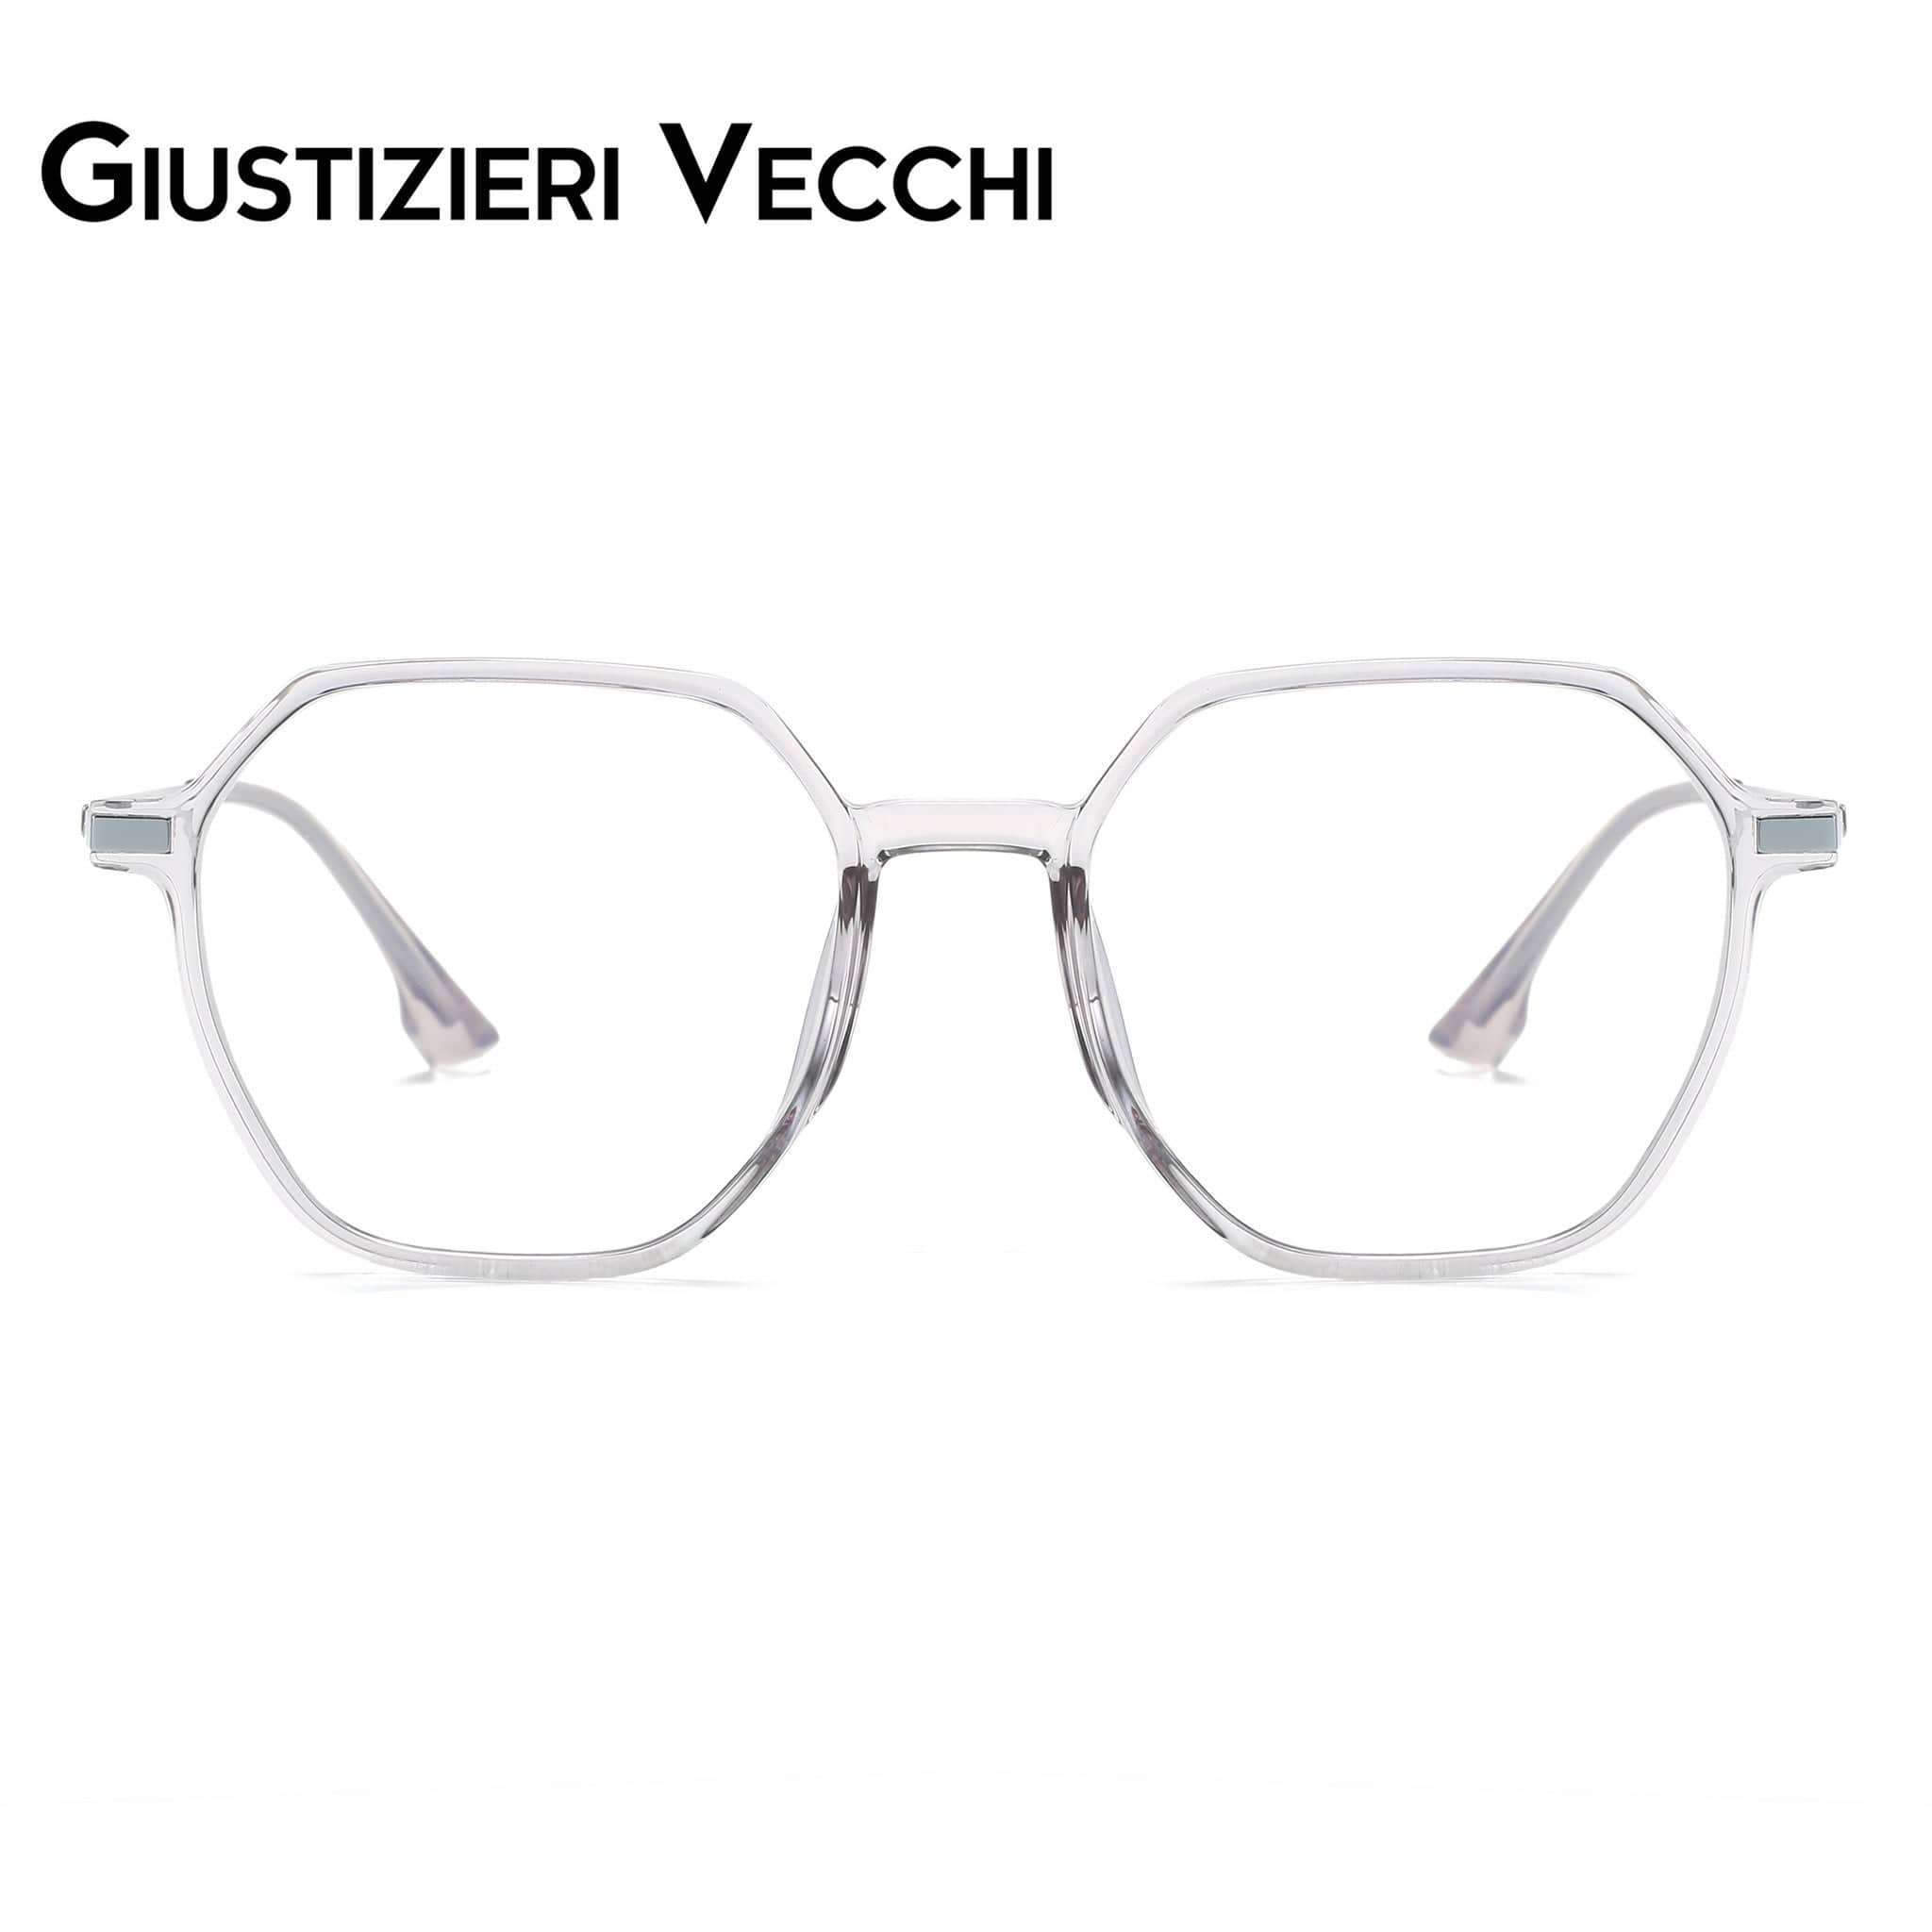 GIUSTIZIERI VECCHI Eyeglasses Medium / Sea Glass Grey IceRider Duo